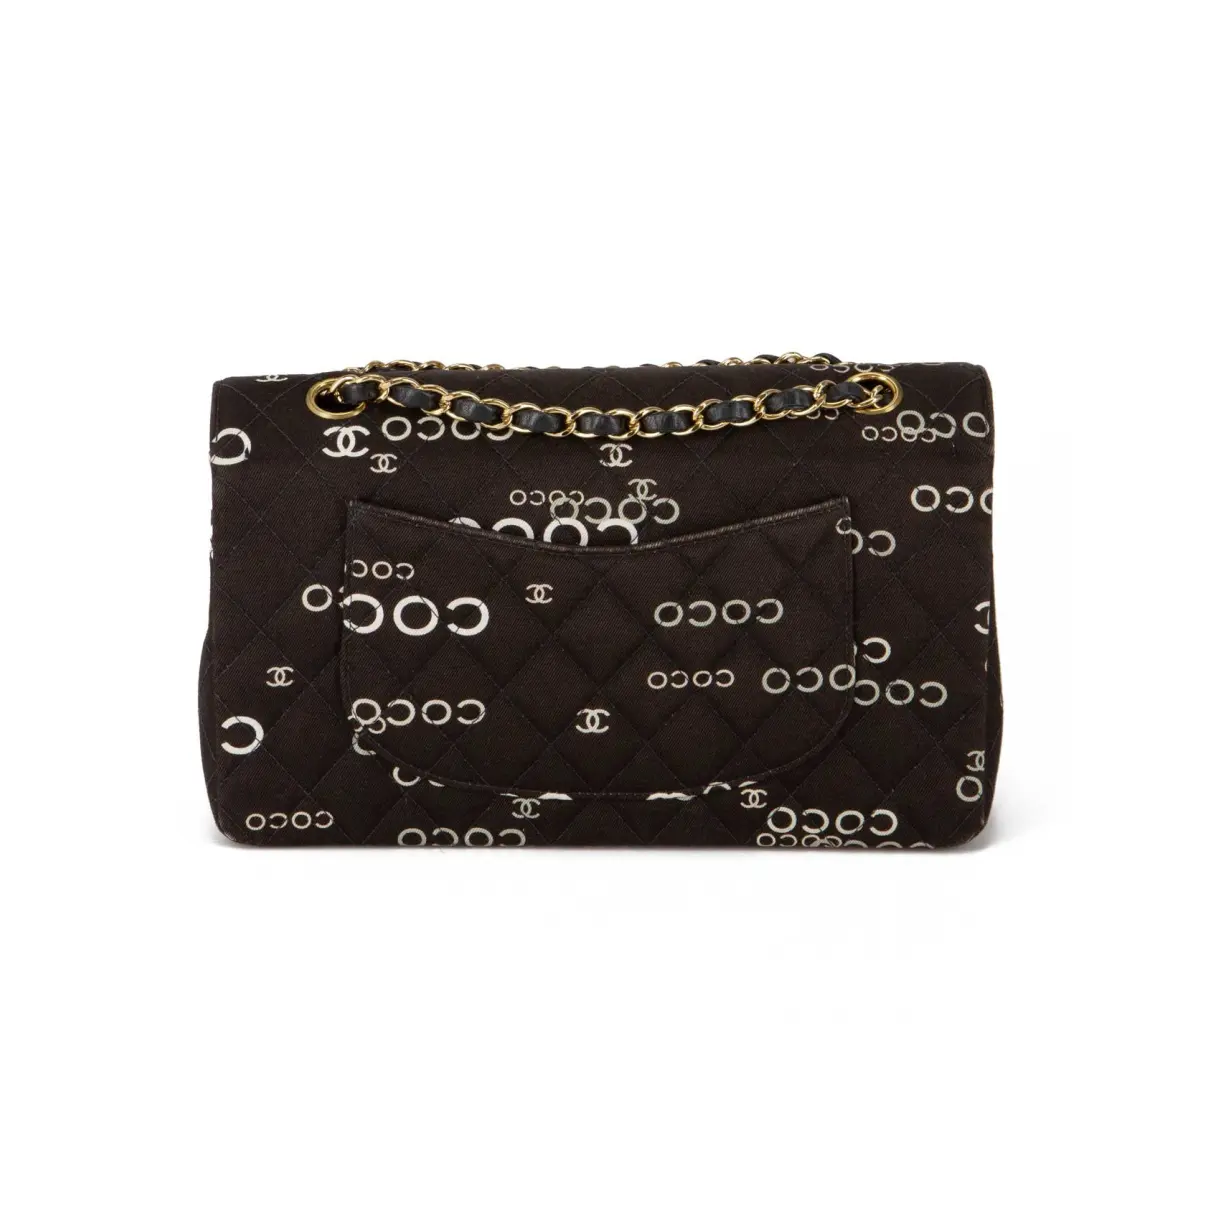 Buy Chanel Timeless/Classique handbag online - Vintage